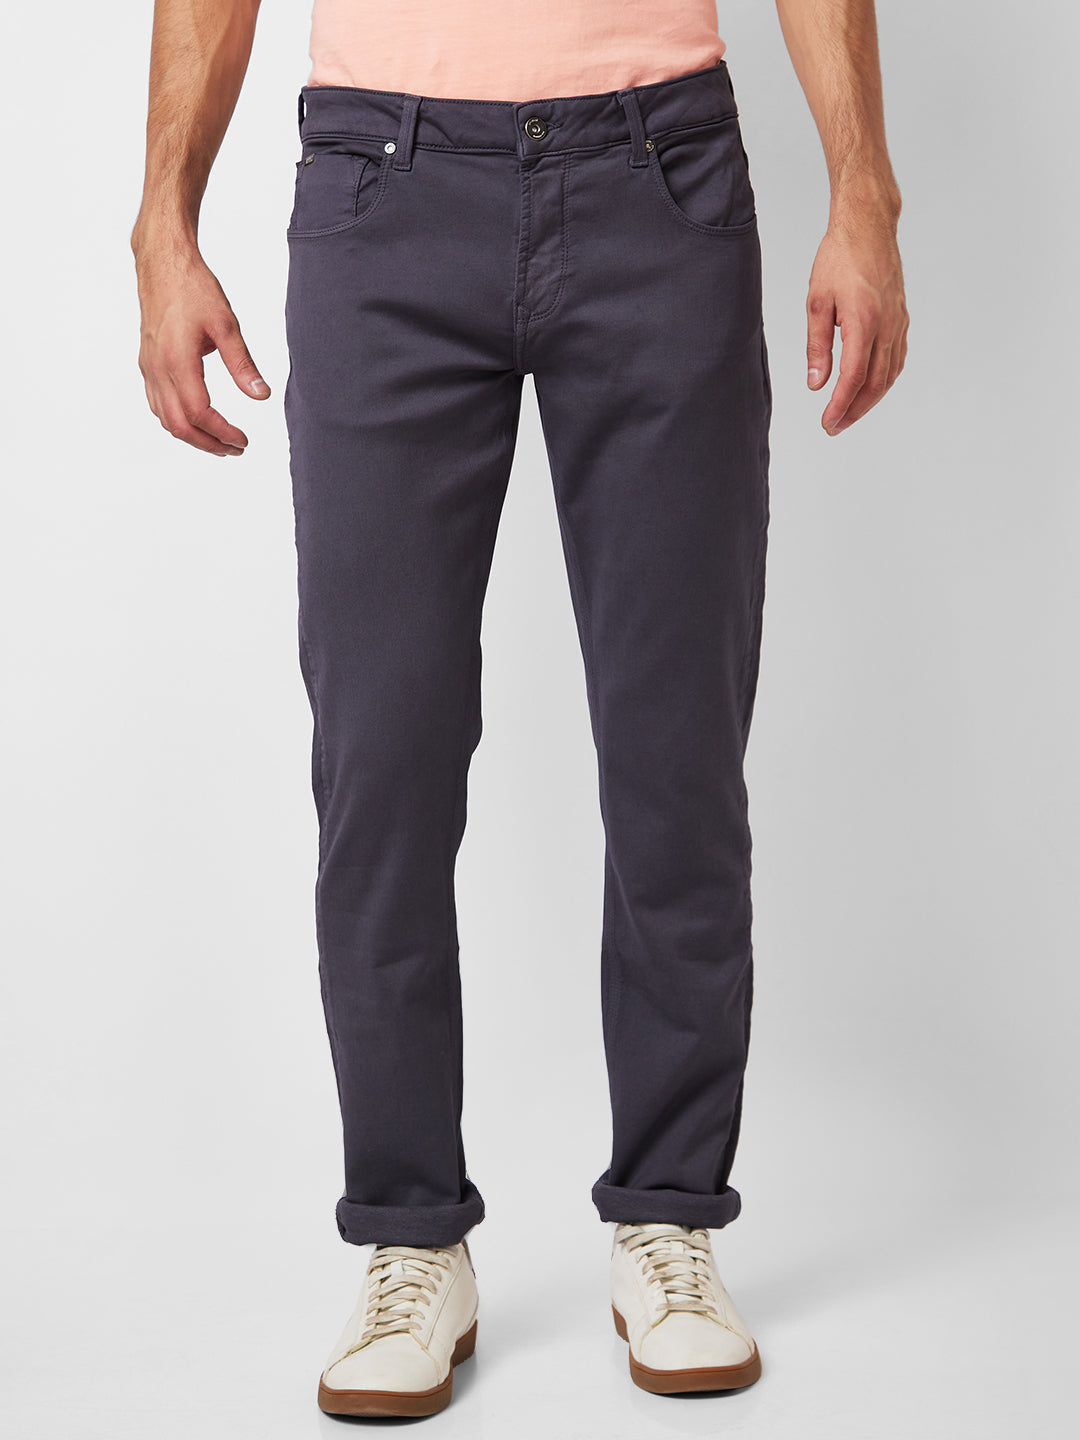 Spykar Low Rise Skinny Fit Grey Jeans For Men